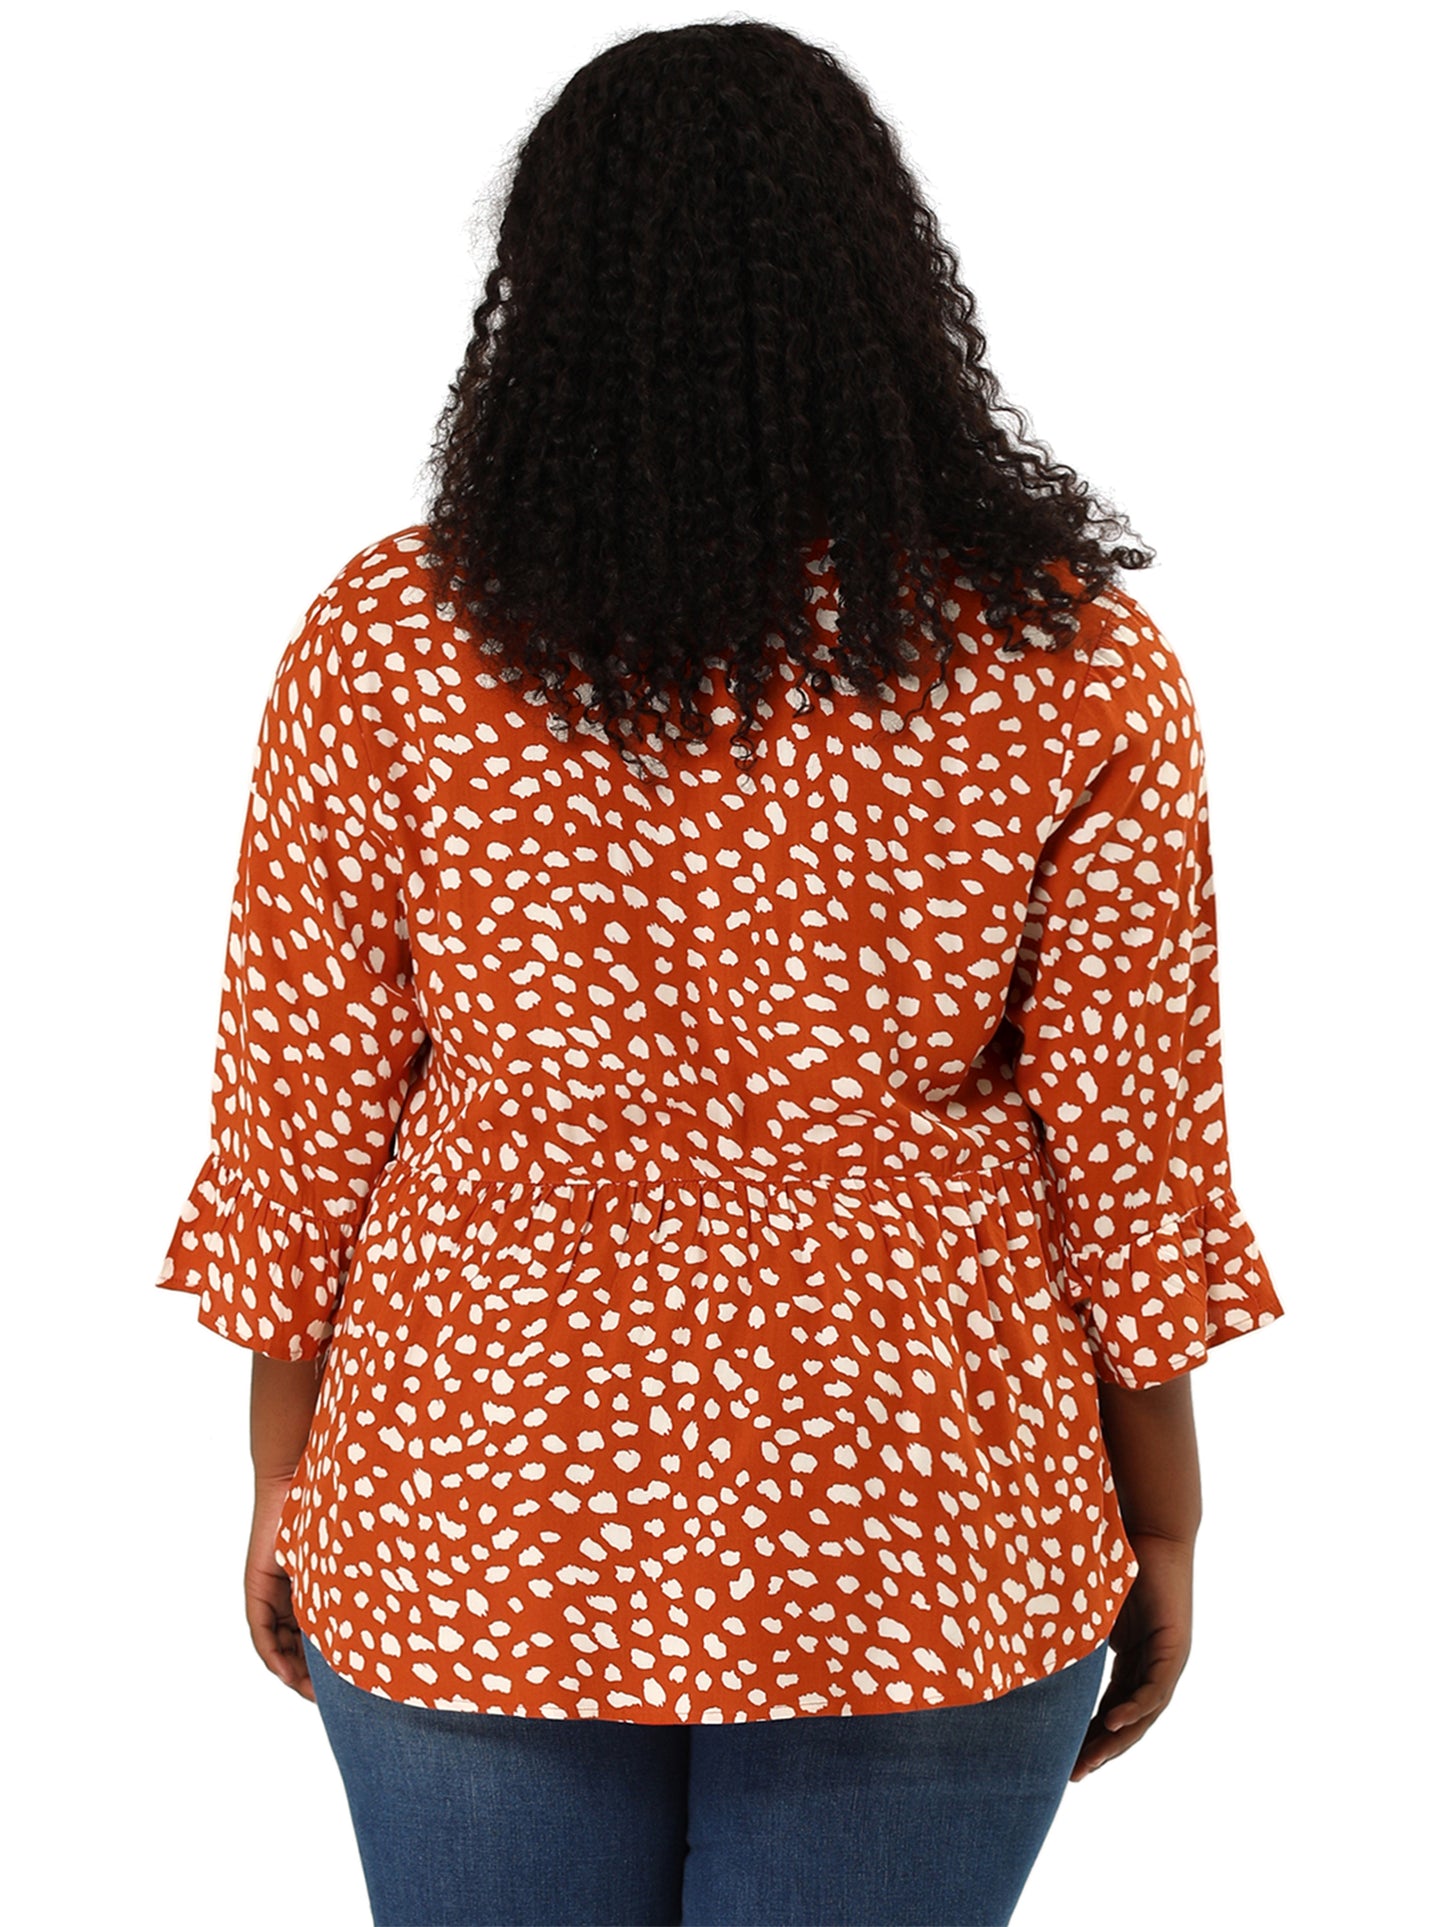 Agnes Orinda Plus Size Polka Dots Blouses V Neck 3/4 Ruffle Sleeve Peplum Tops Orange